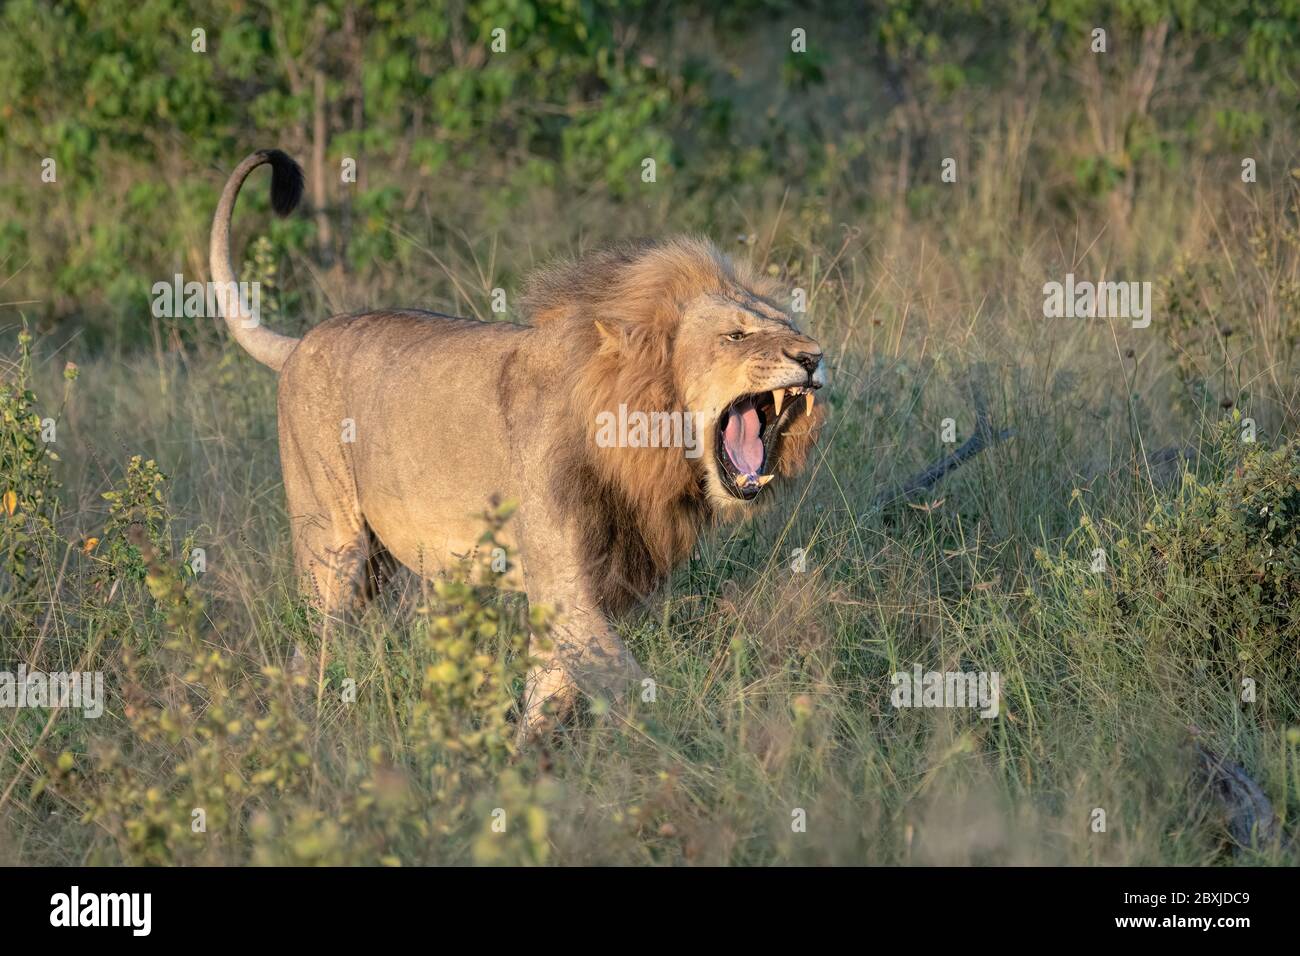 A snarling lion walks through the tall grasses on the Botswana savanna Stock Photo